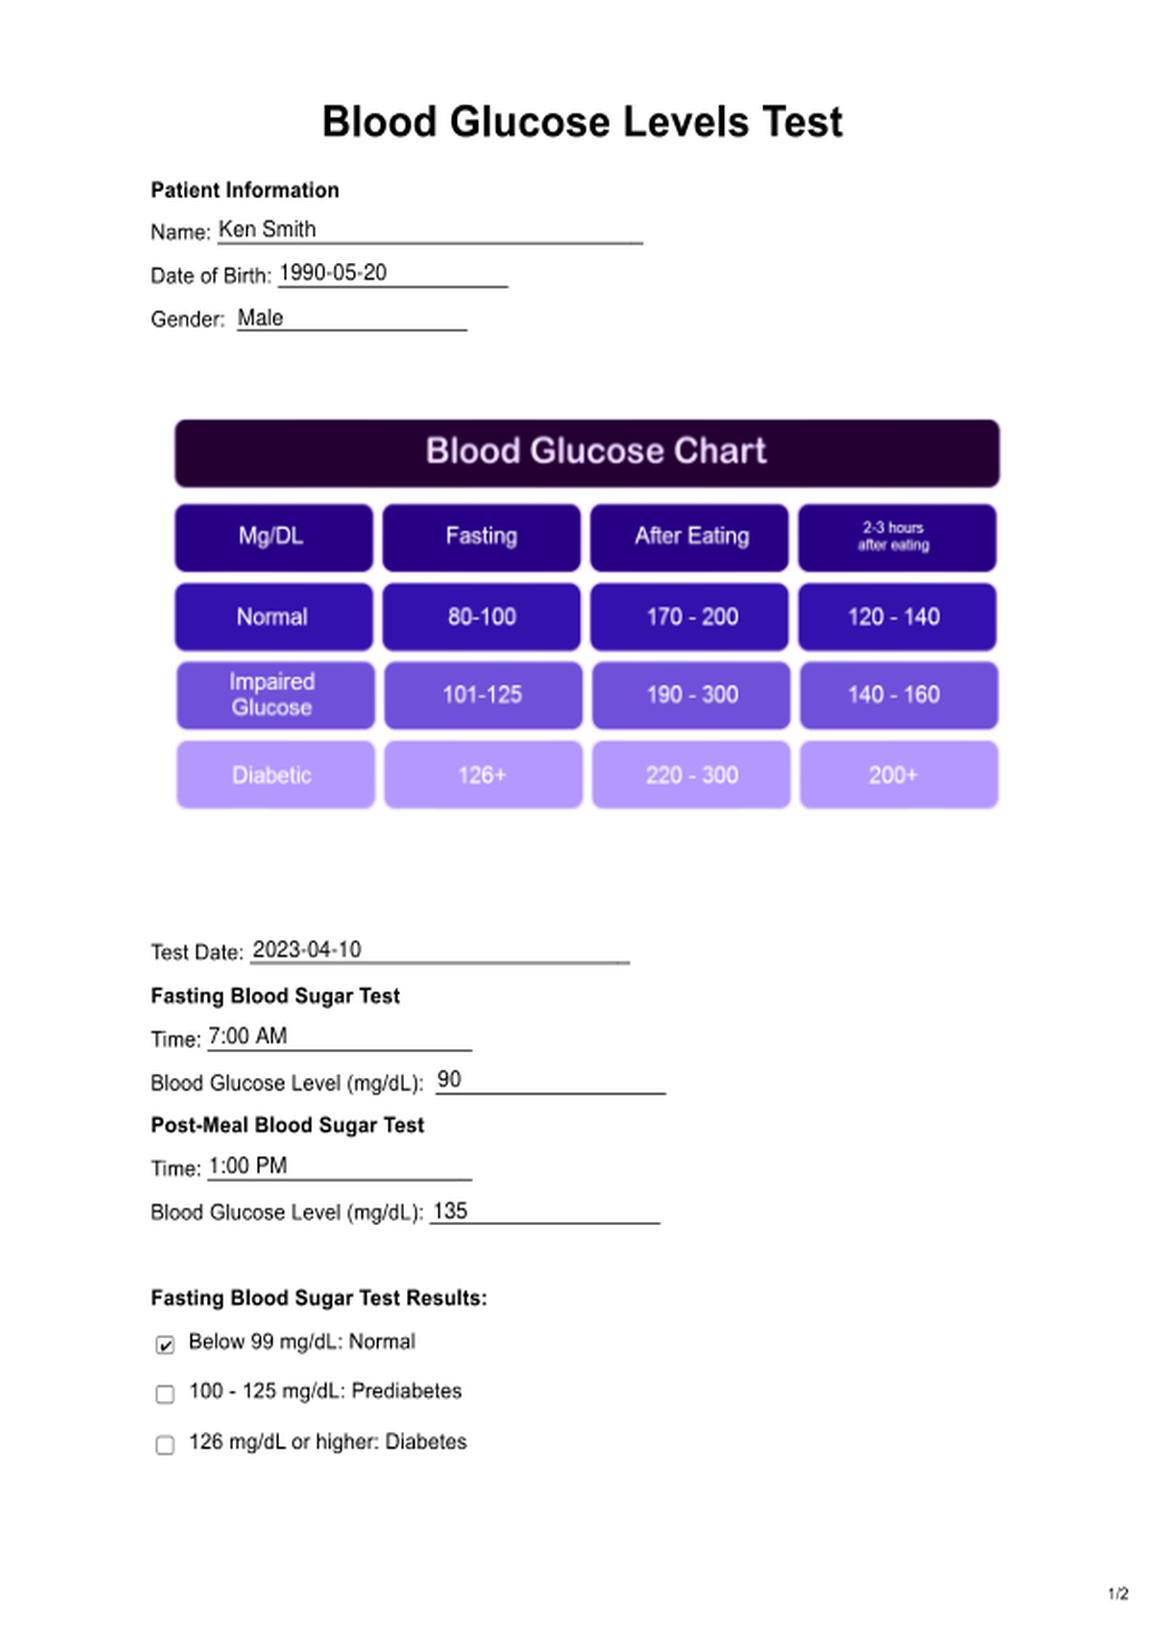 Blood Glucose Levels PDF Example